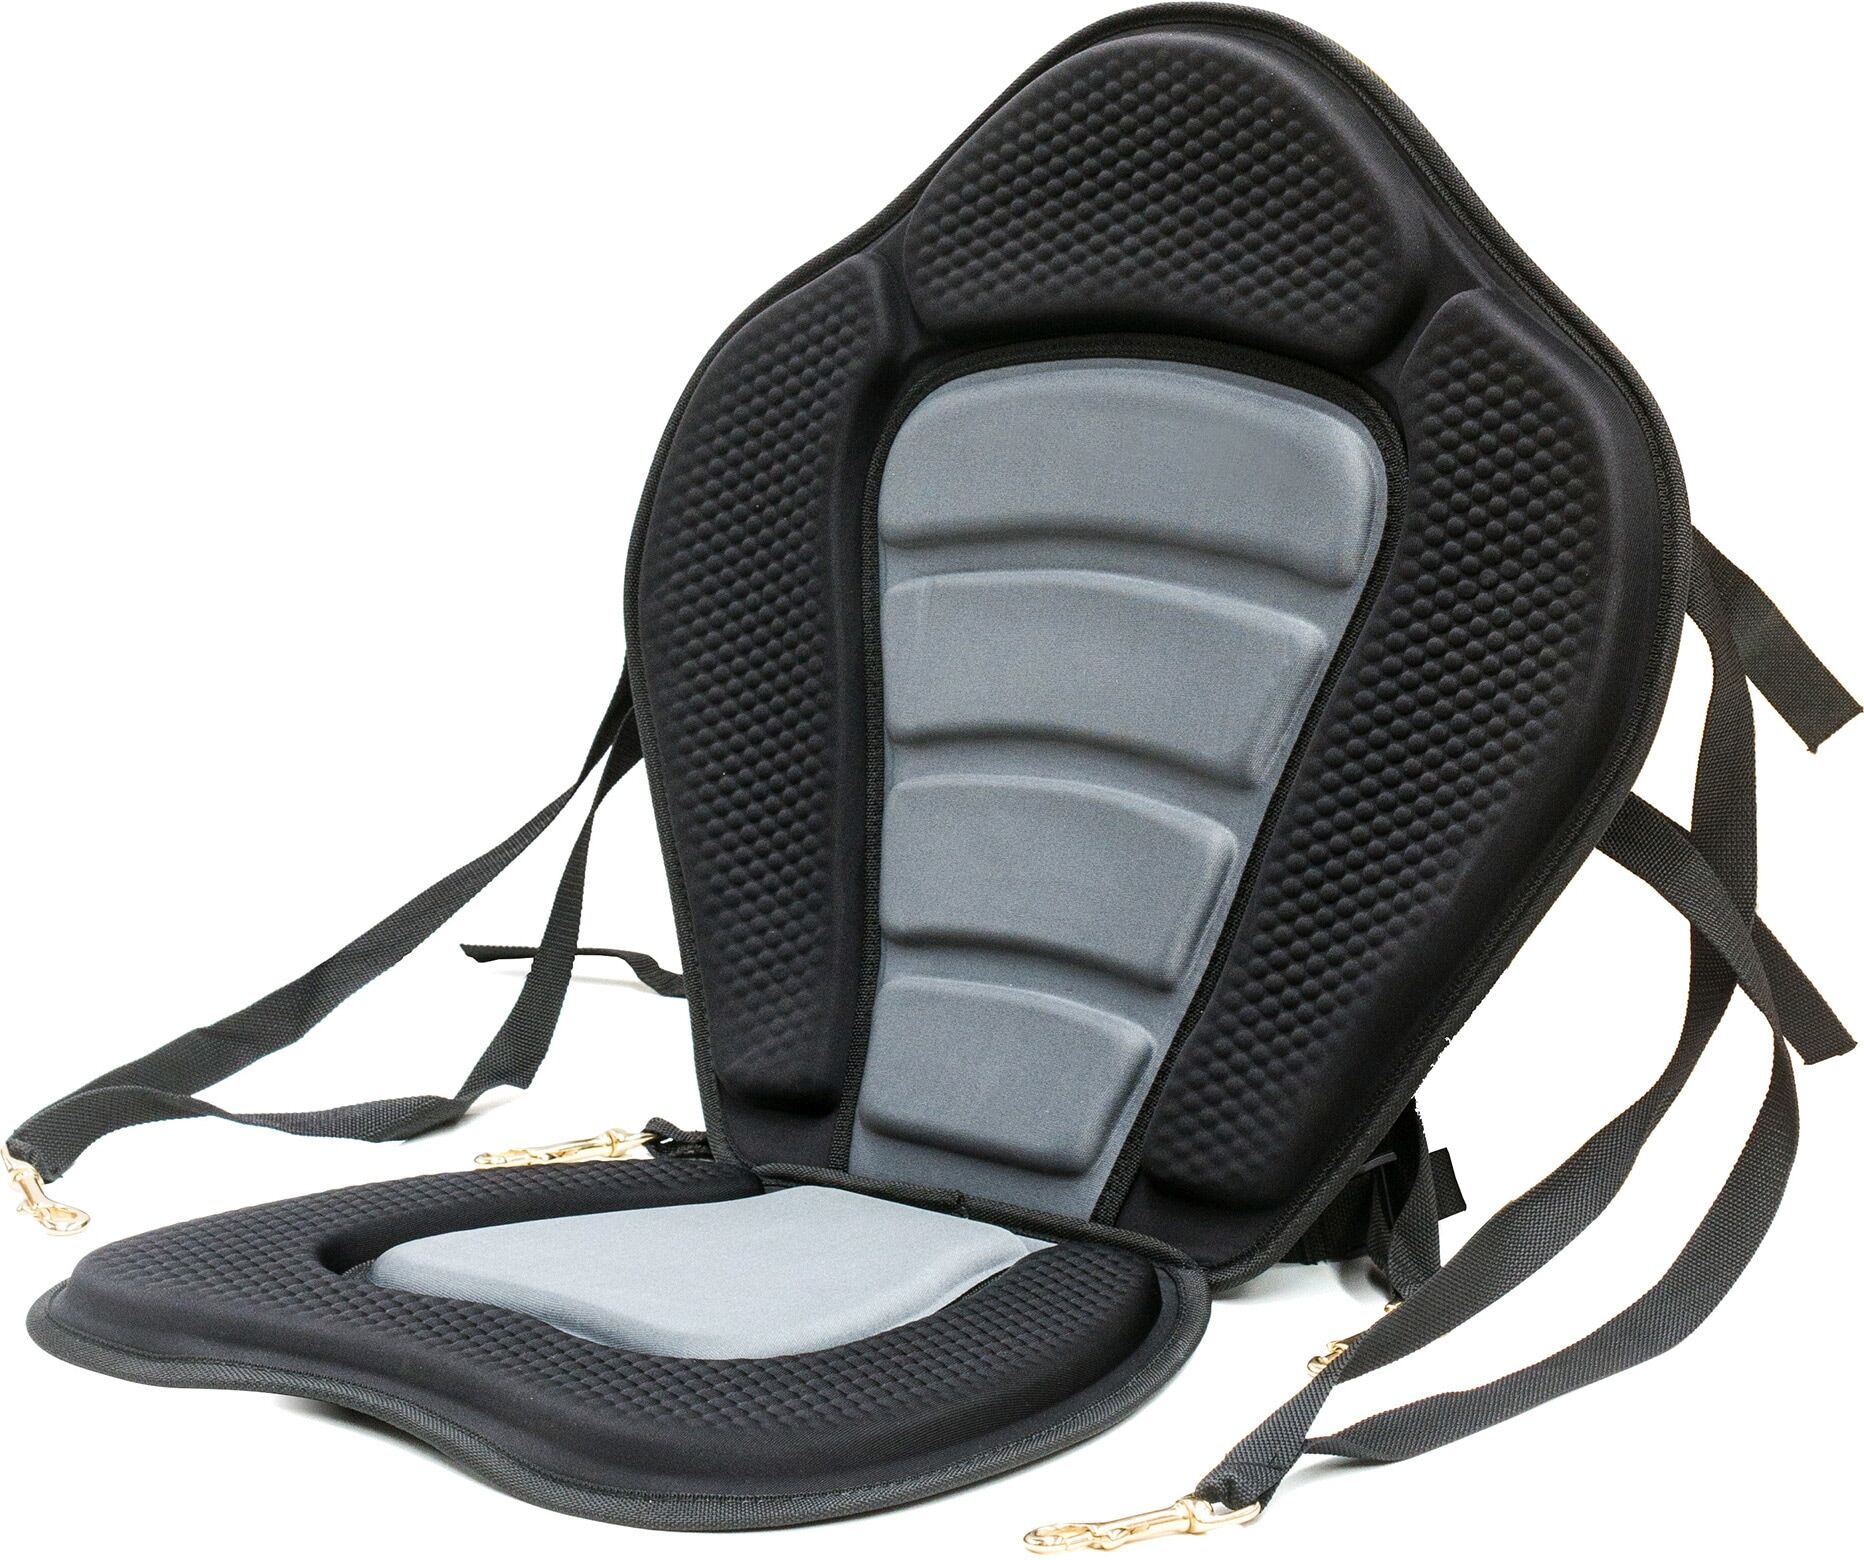 SUP-Rückenlehne EXPLORER "Deluxe Kajak Sitz" Rückenlehnen Gr. B/L: 45 cm x 51 cm Sitz: 32 x 36cm,Rücken: 51 x 45cm, schwarz Stand Up Paddle